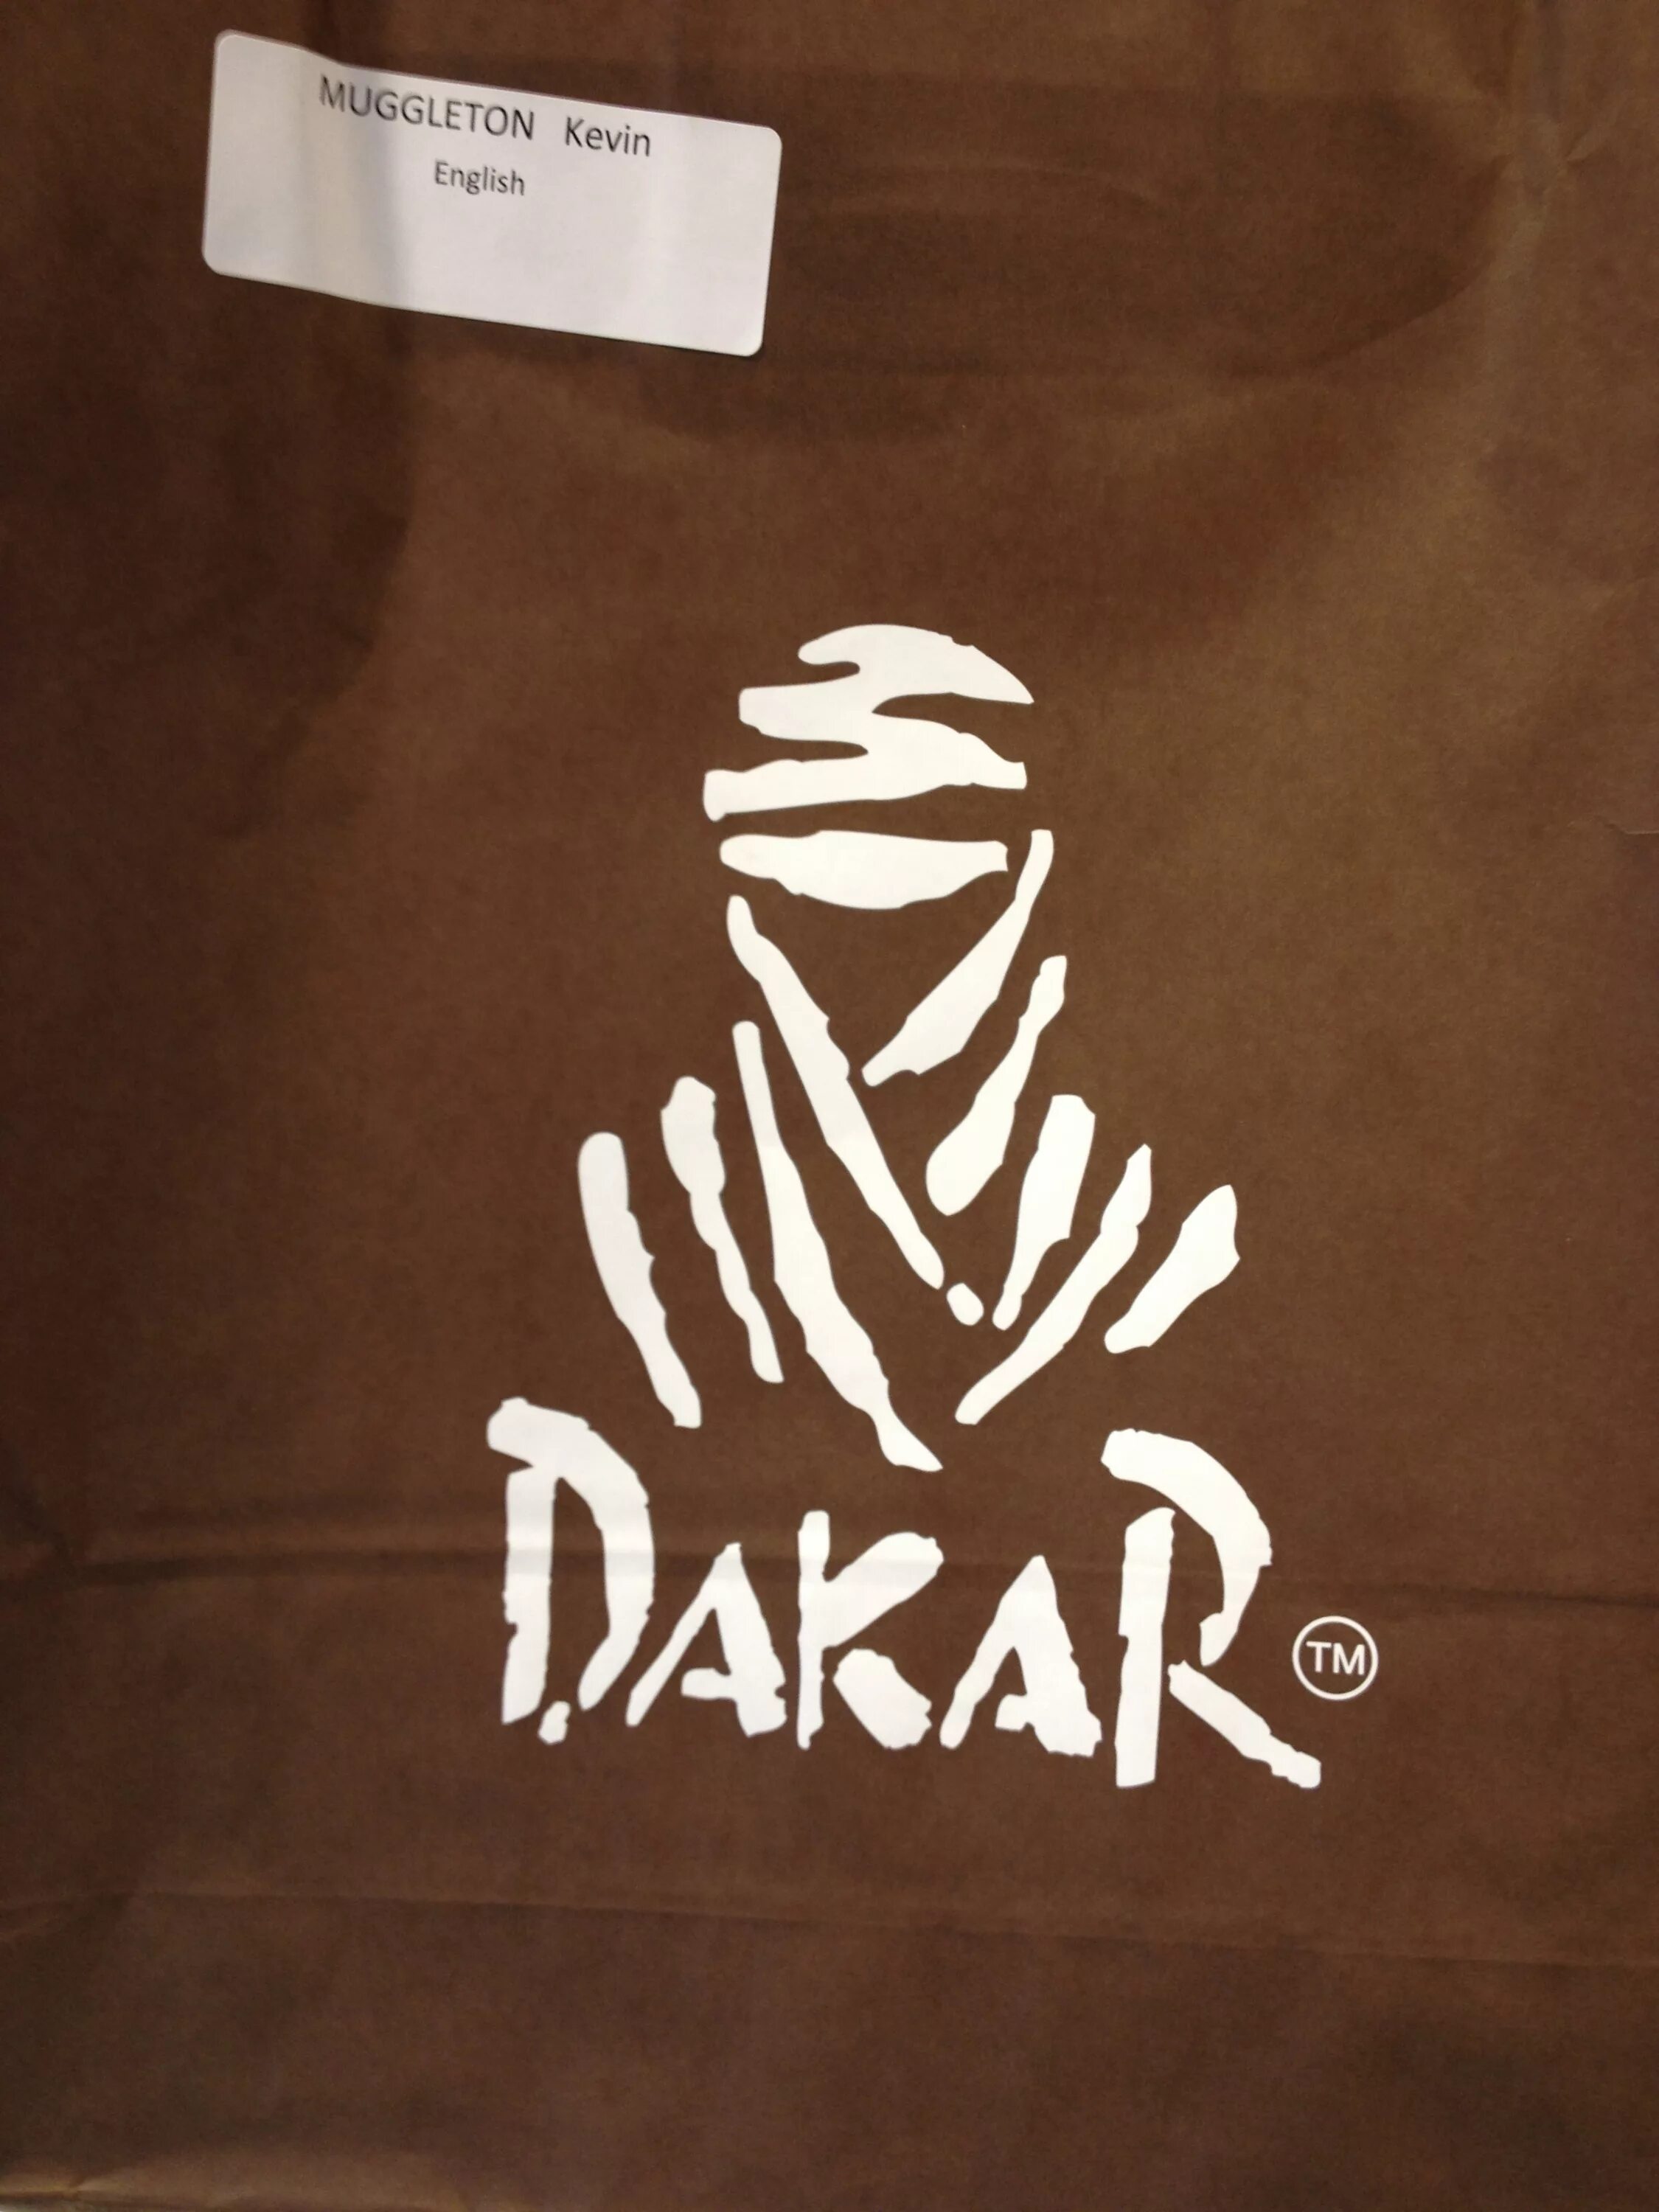 Dakar логотип. Париж Дакар логотип. Ралли Дакар логотип. Какой африканский народ связан с логотипом дакар